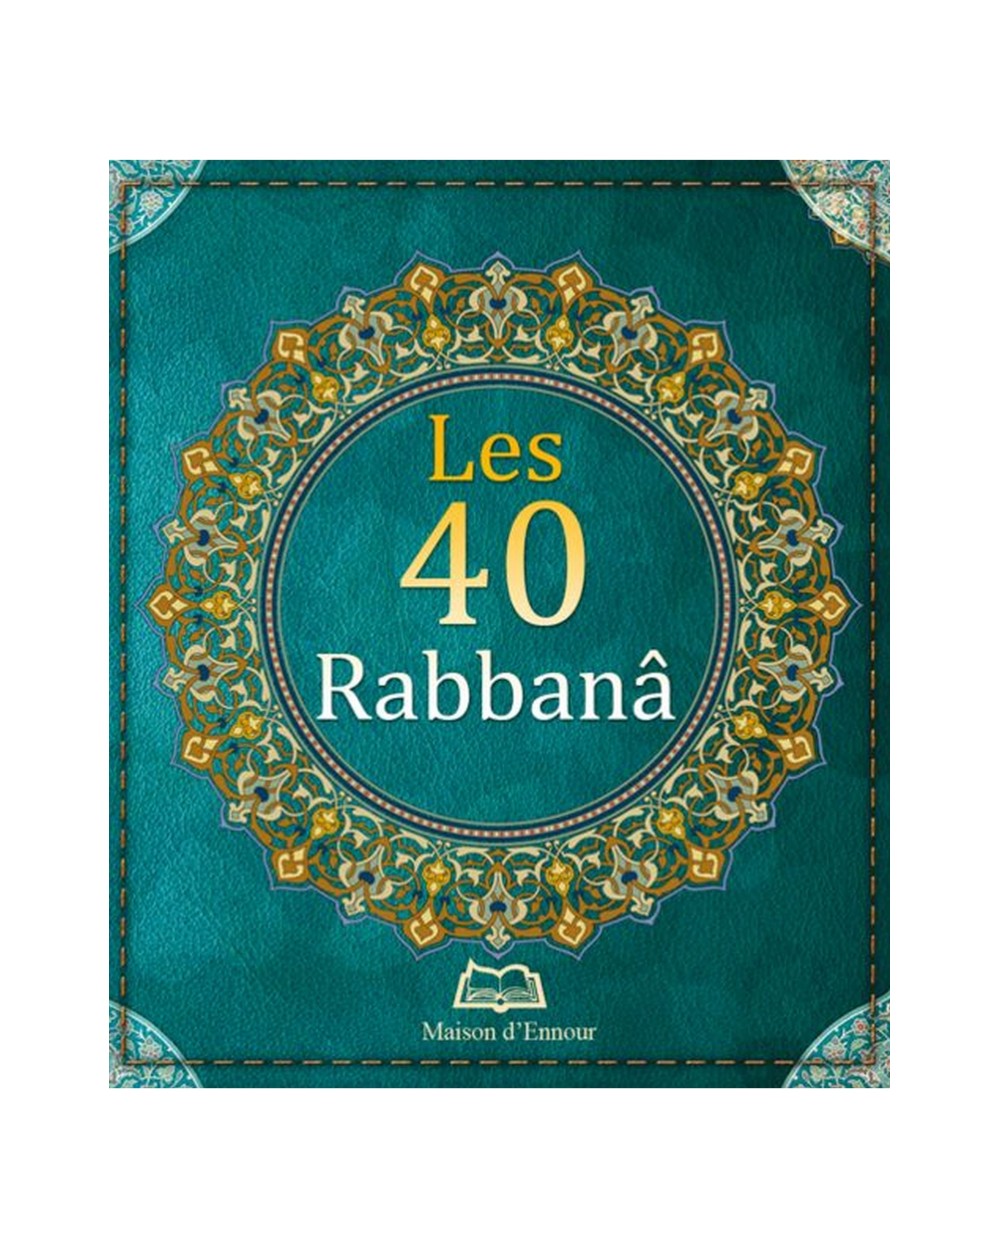 The 40 Rabbanâ - House of Ennour